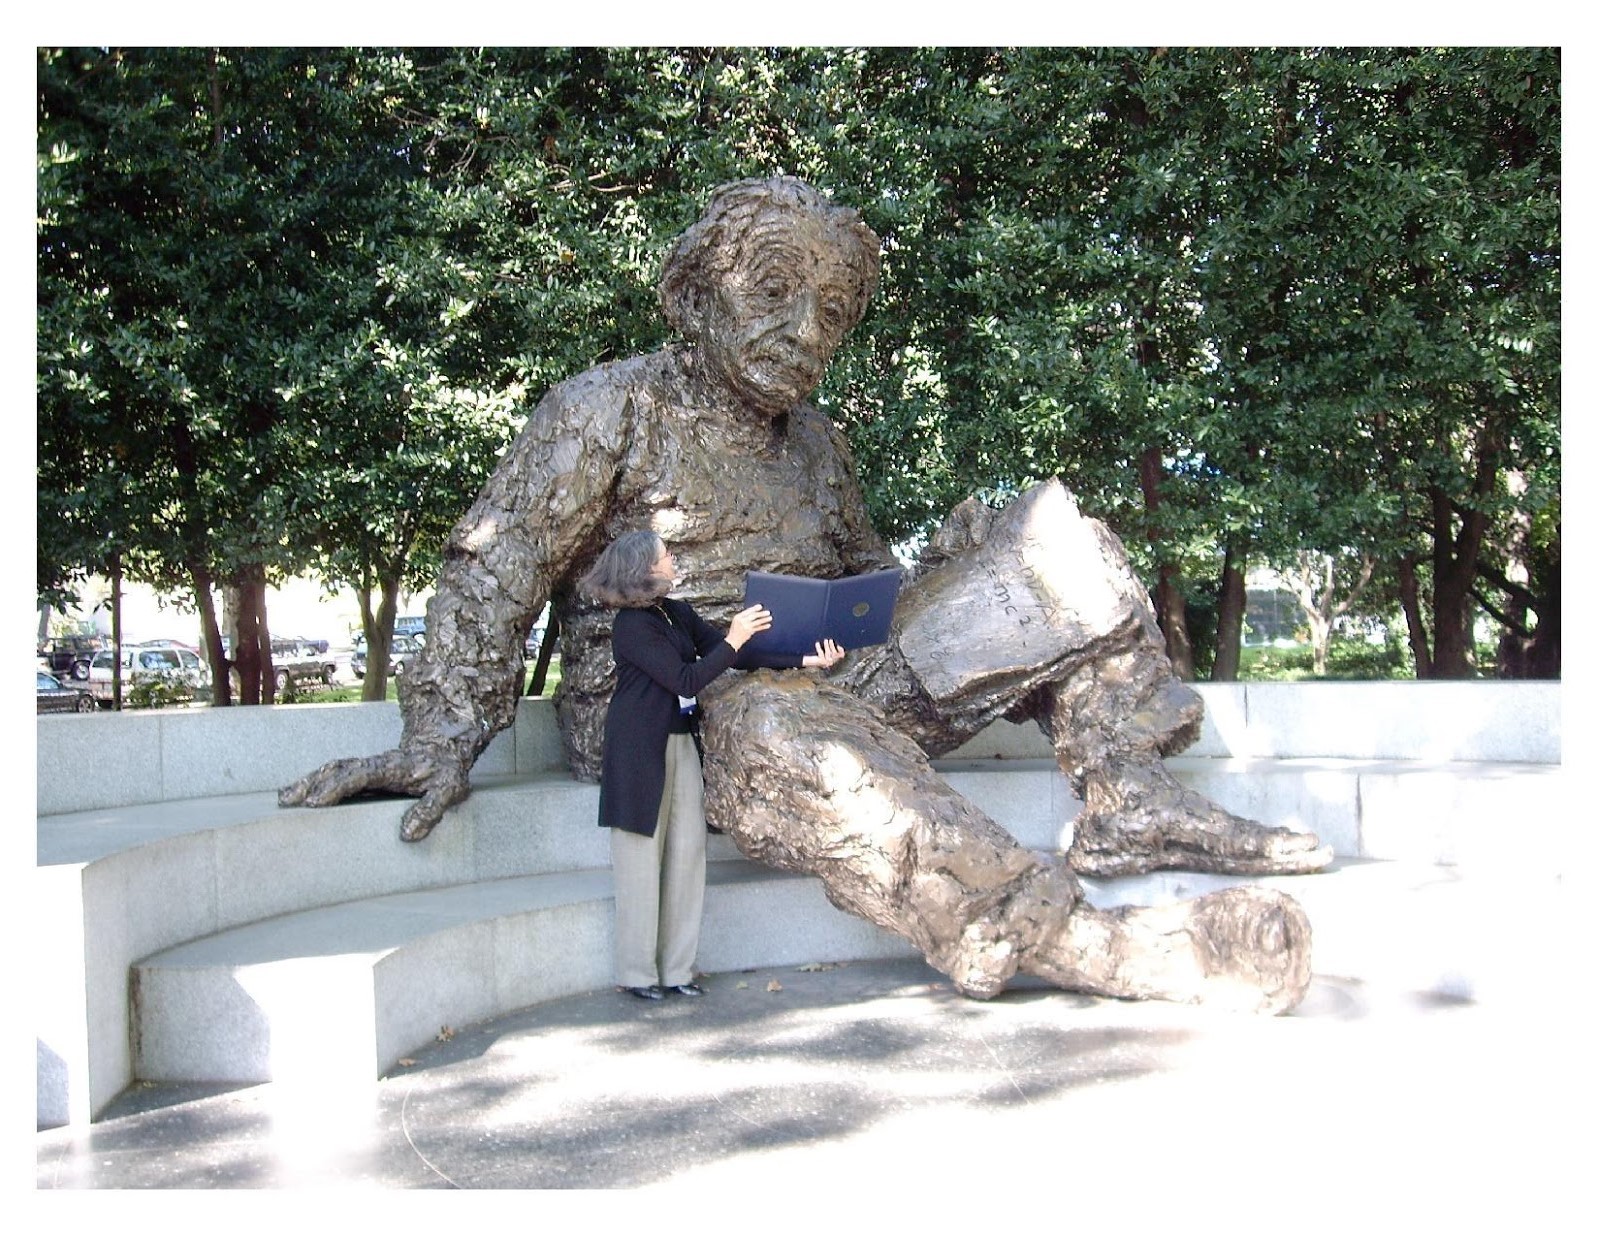 Susan Eggers showing her award to statue of Albert Einstein